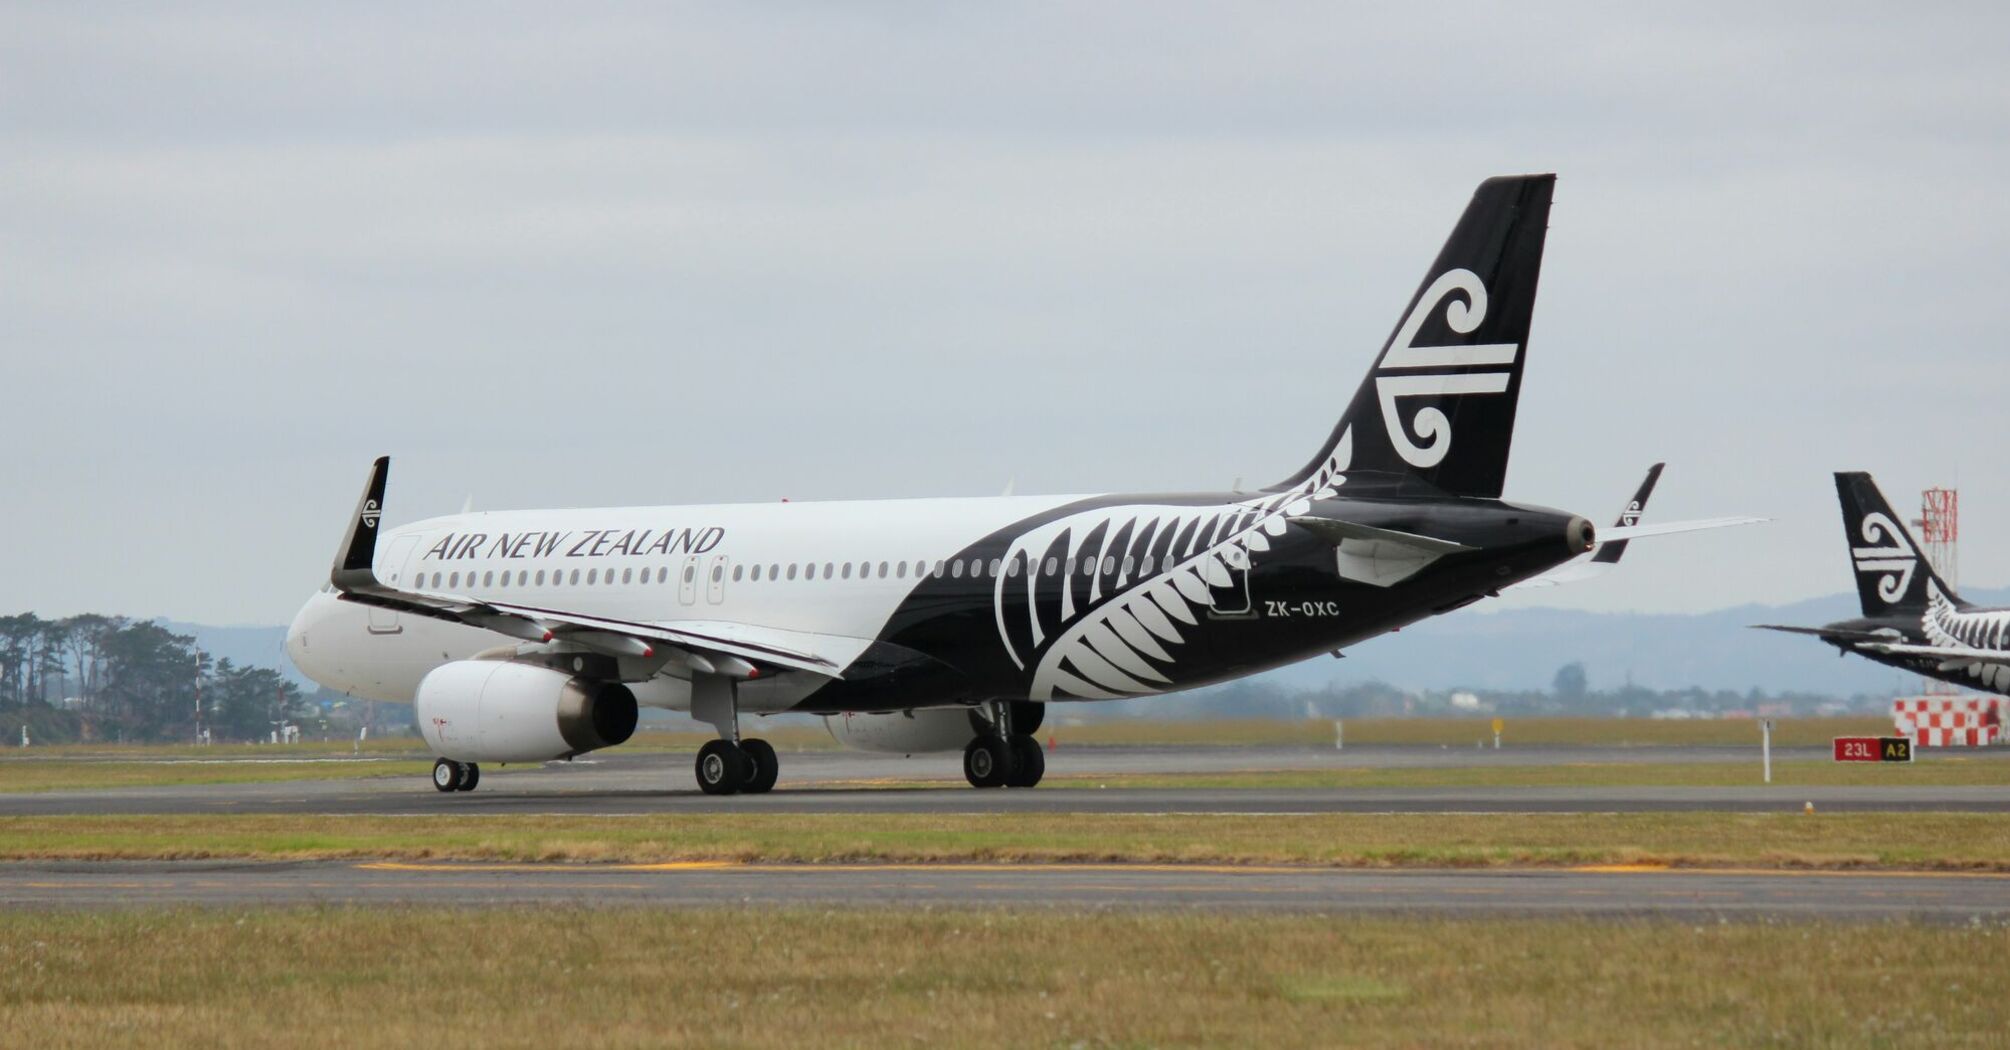 White and black Air New Zealand airplane daytime